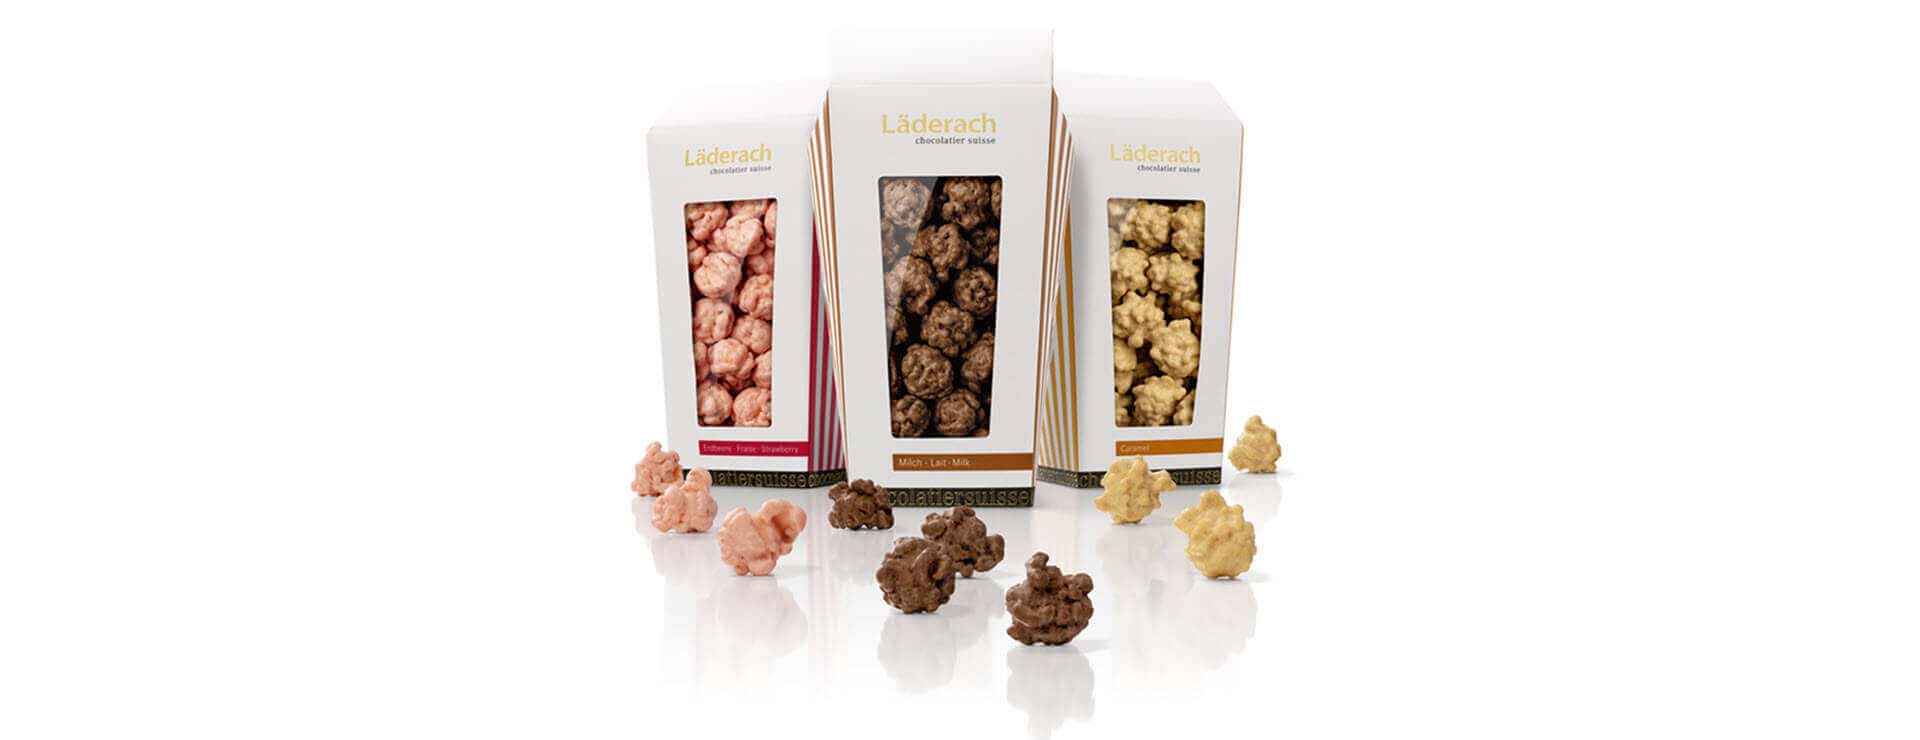 Läderach presents gourmet popcorn for connoisseurs